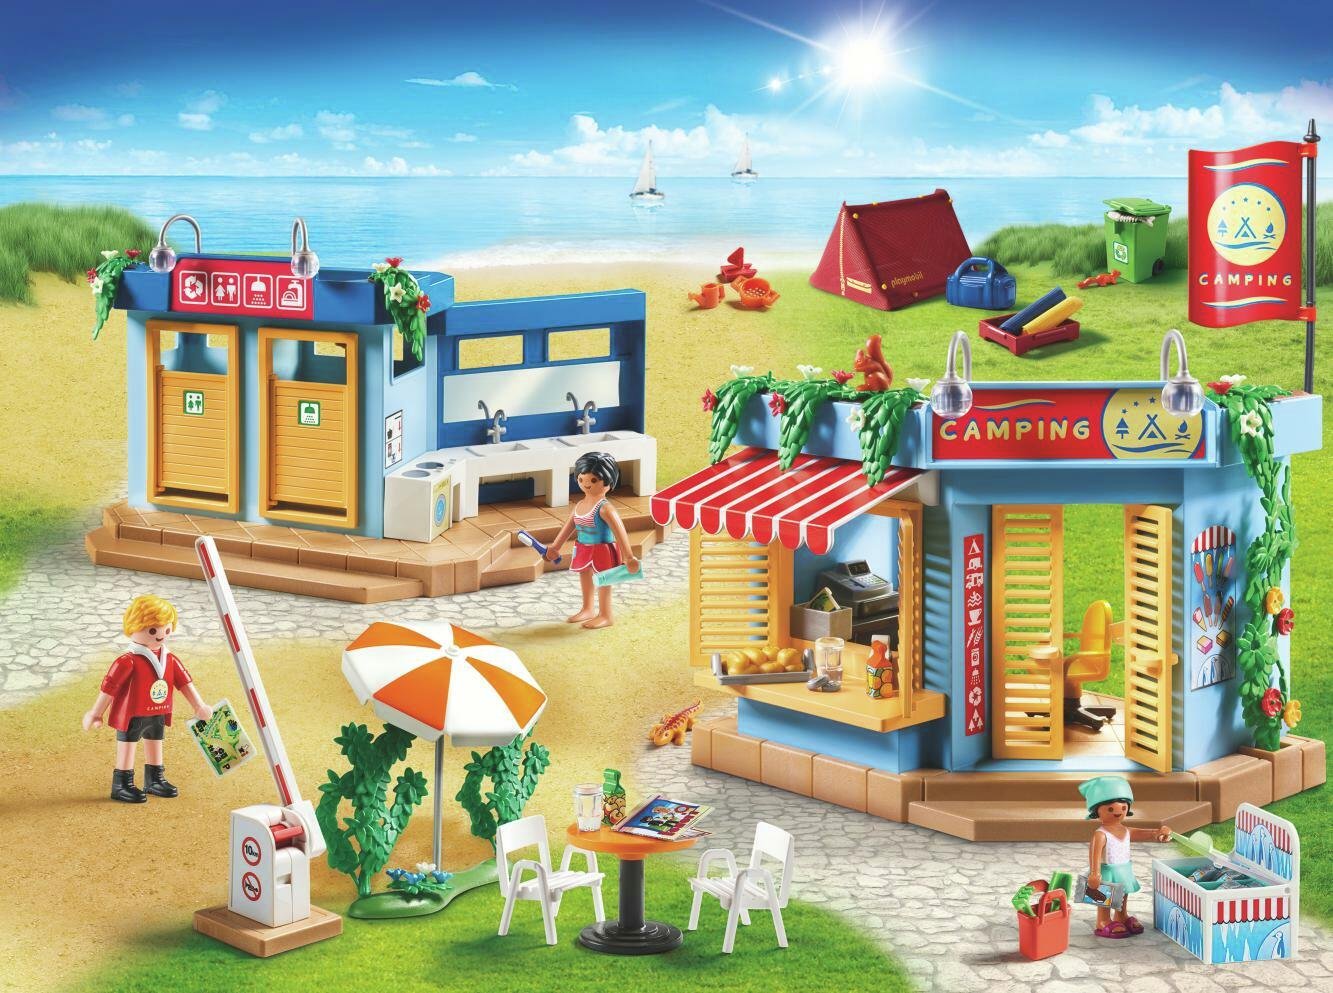 Playmobil 70087 Family Fun Campground Playset Review